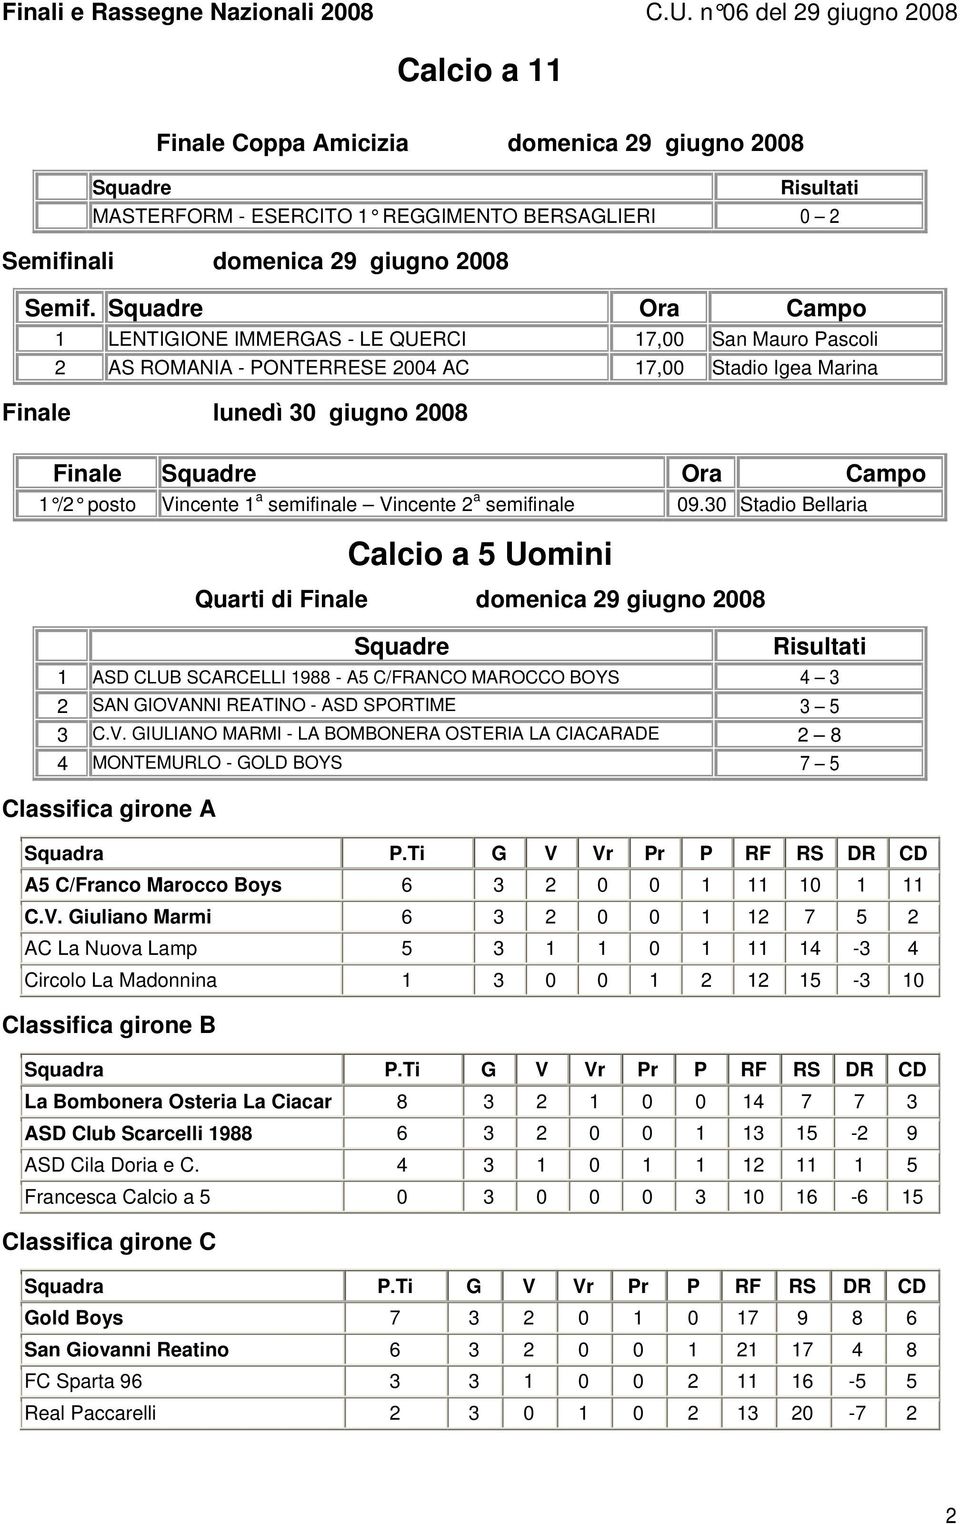 semifinale Vincente 2 a semifinale 09.